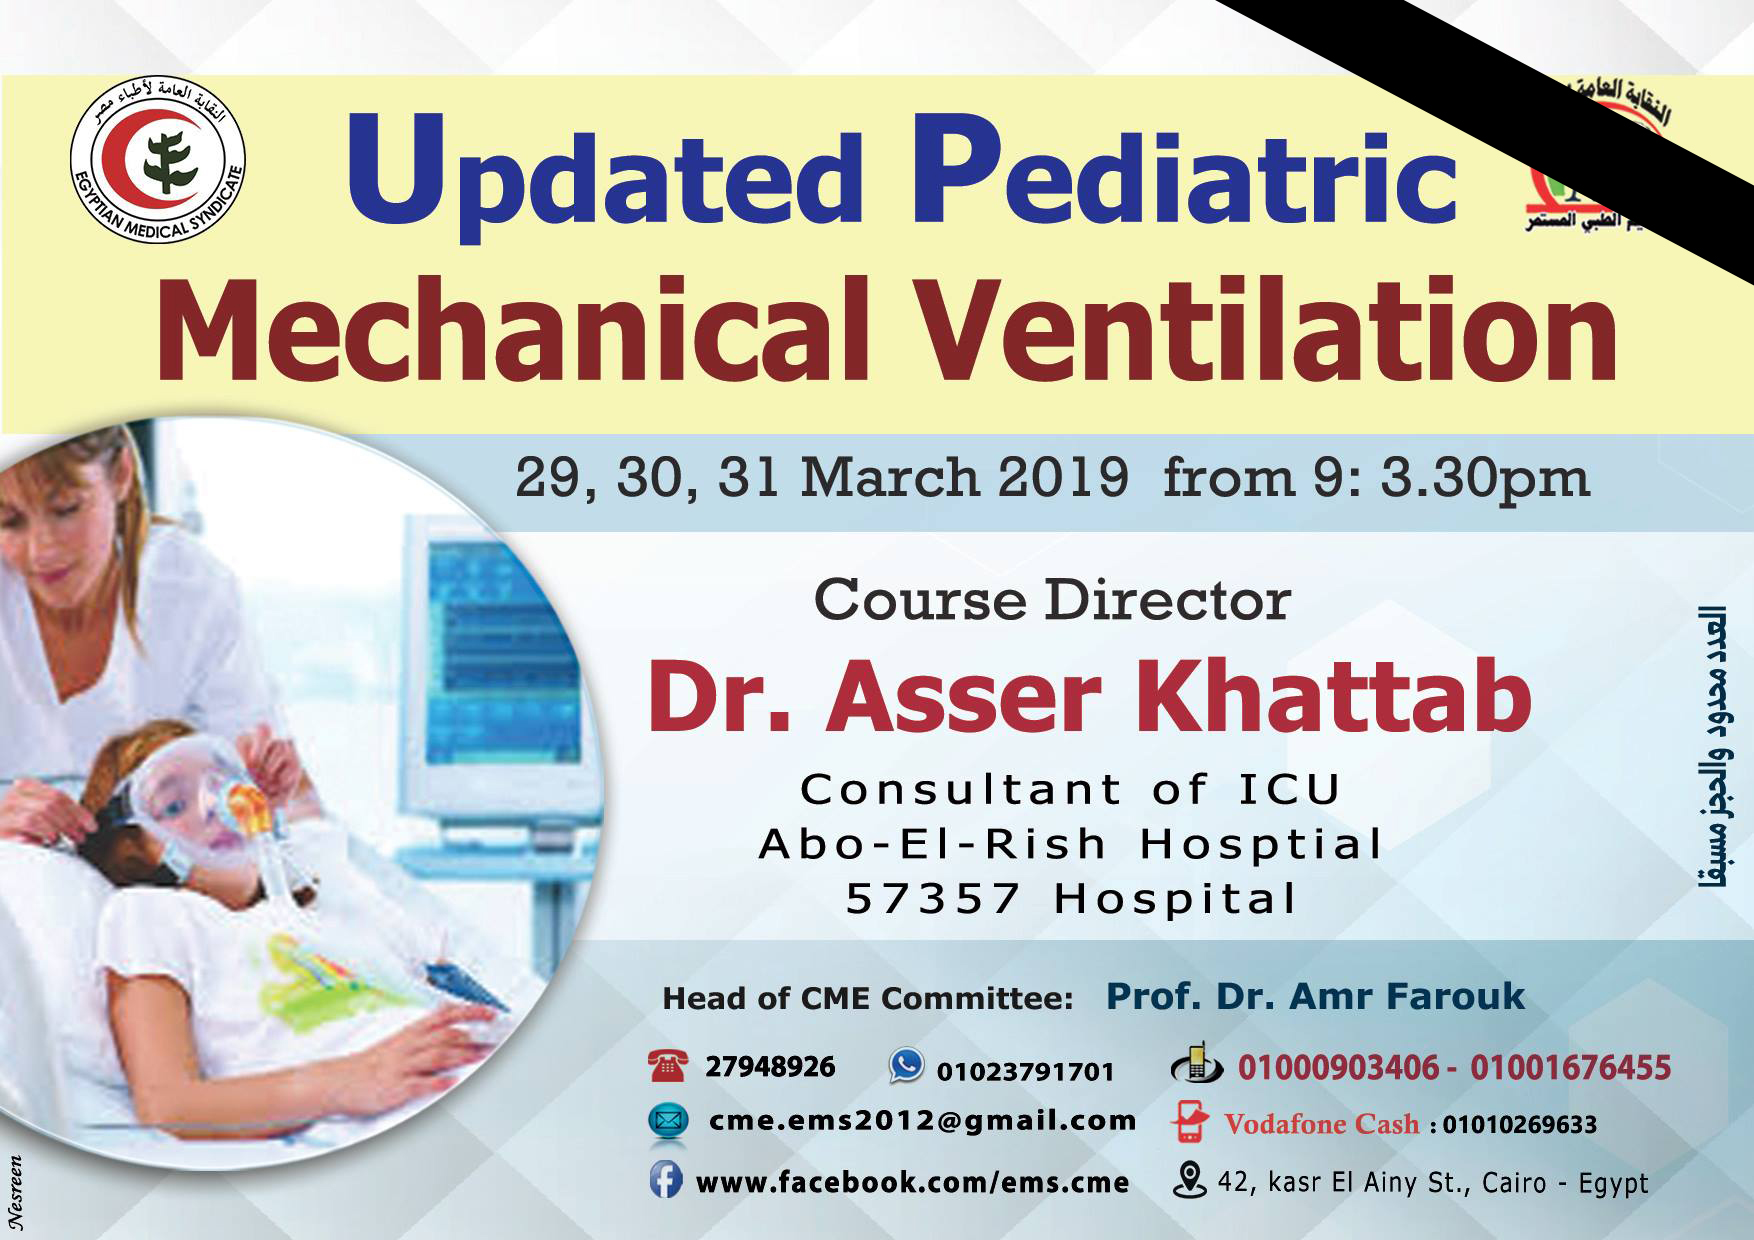 Updated Pediatric Mechanical Ventilation